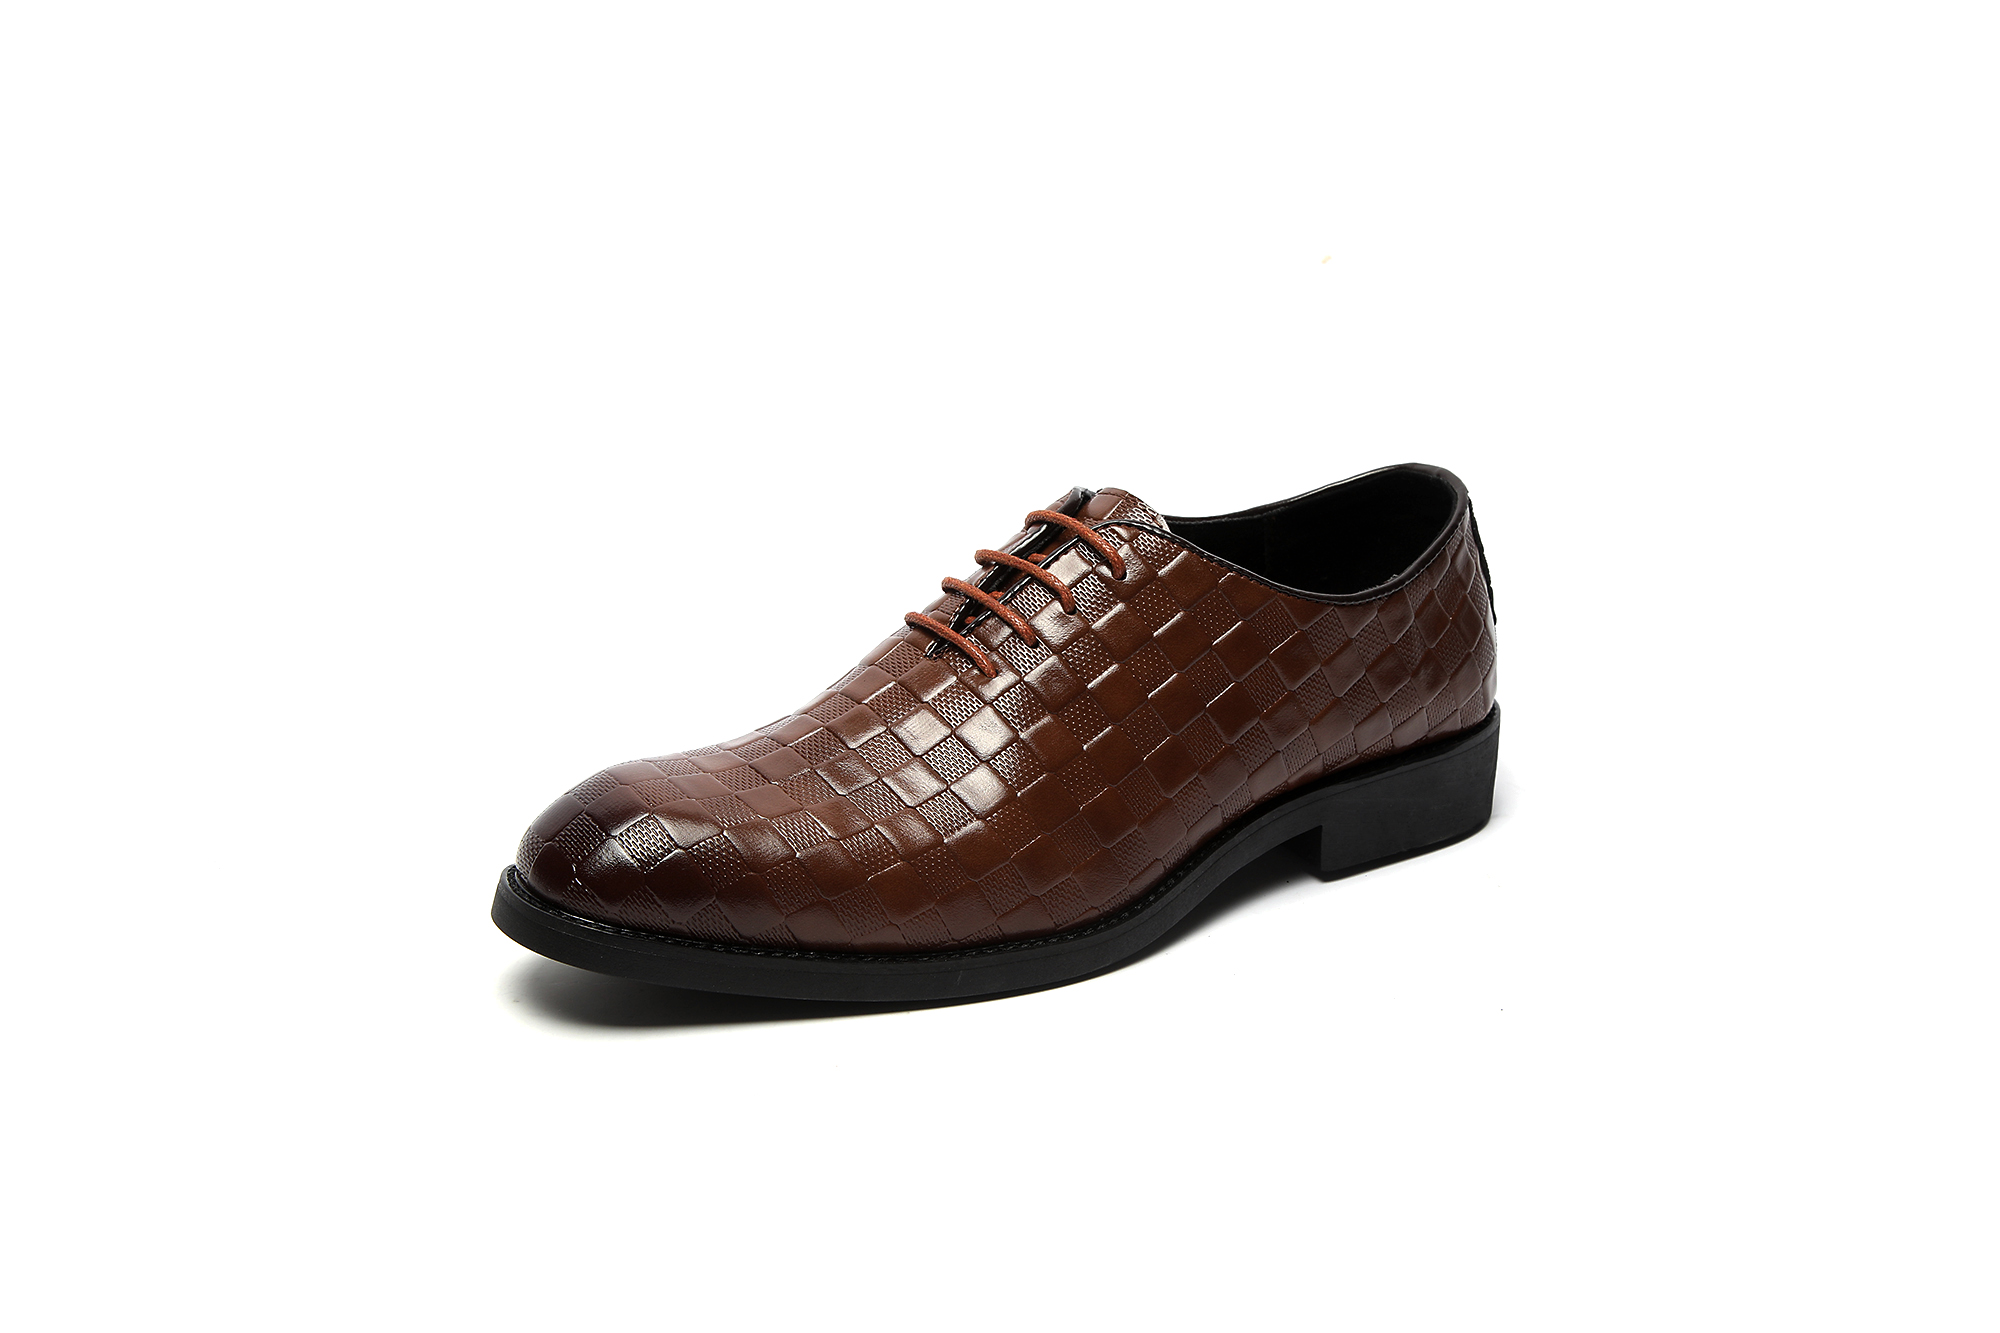 Buteene lattice Formal Leather Shoes For Men EU48 Brown | Wholesale ...